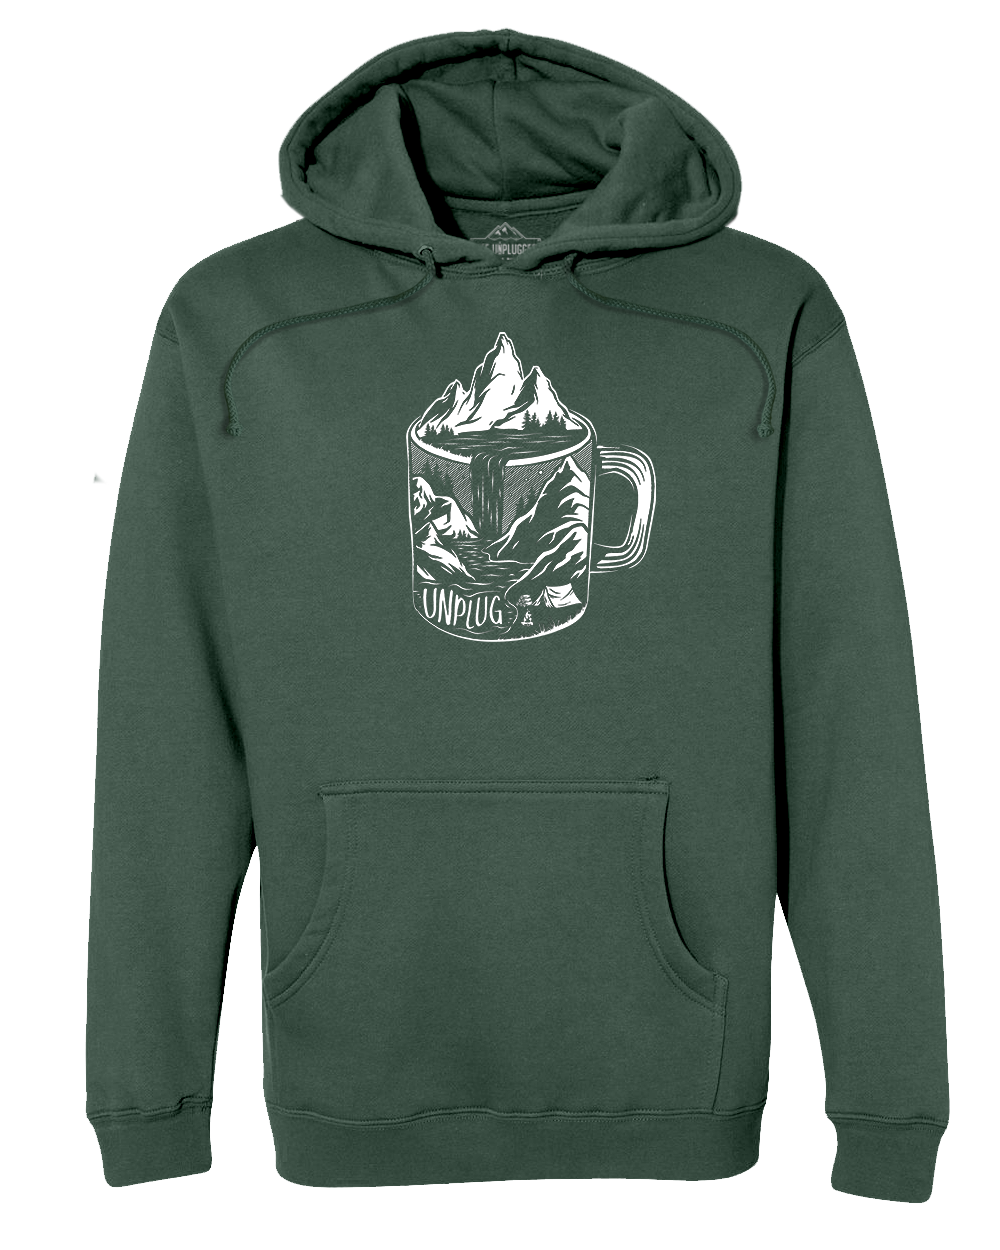 COFFEE MOUNTAIN SCENE Premium Heavyweight Hooded Sweatshirt